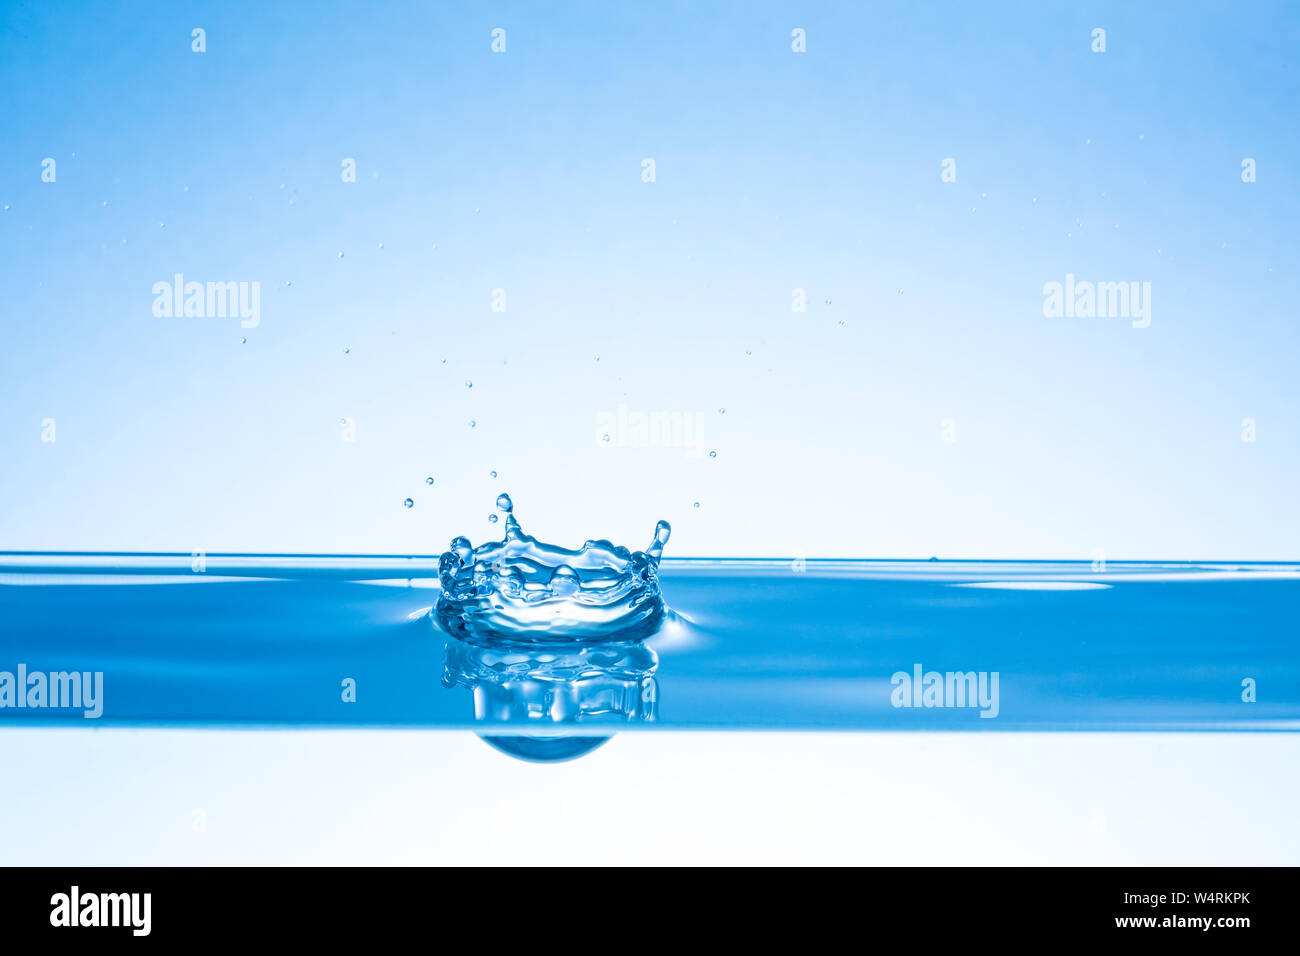 Drop splashing in water Banque D'Images